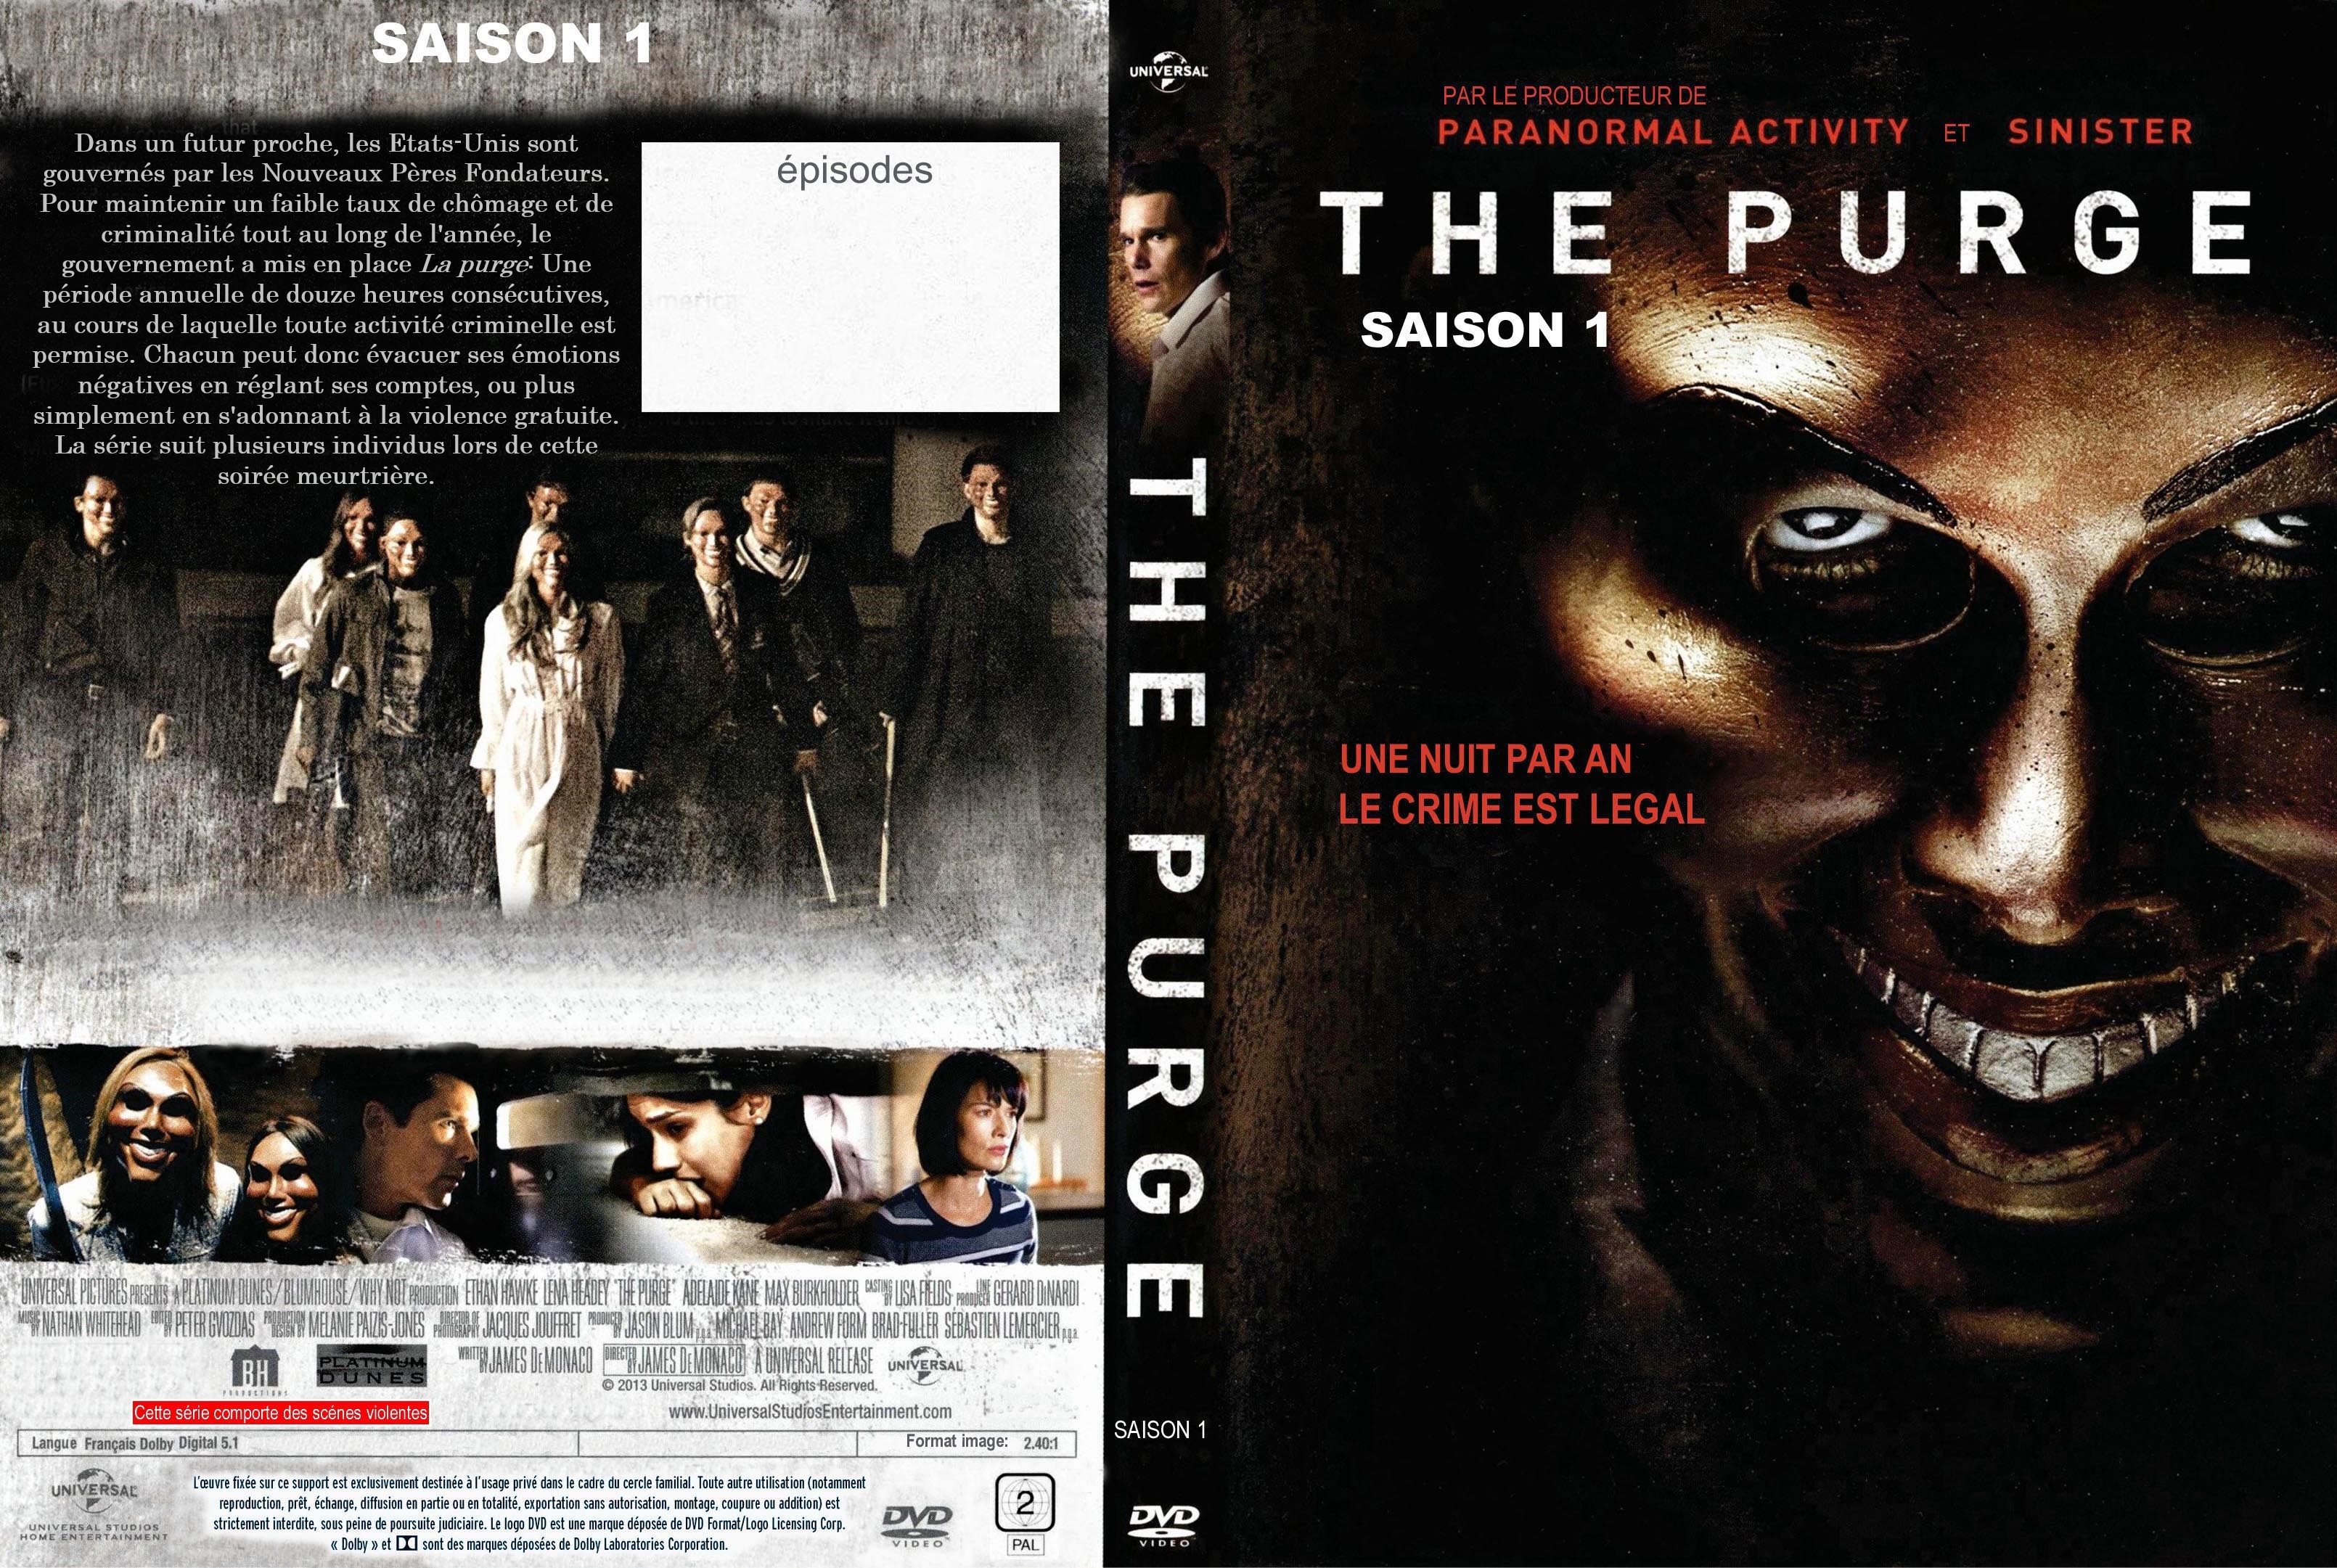 Jaquette DVD The Purge saison 1 custom